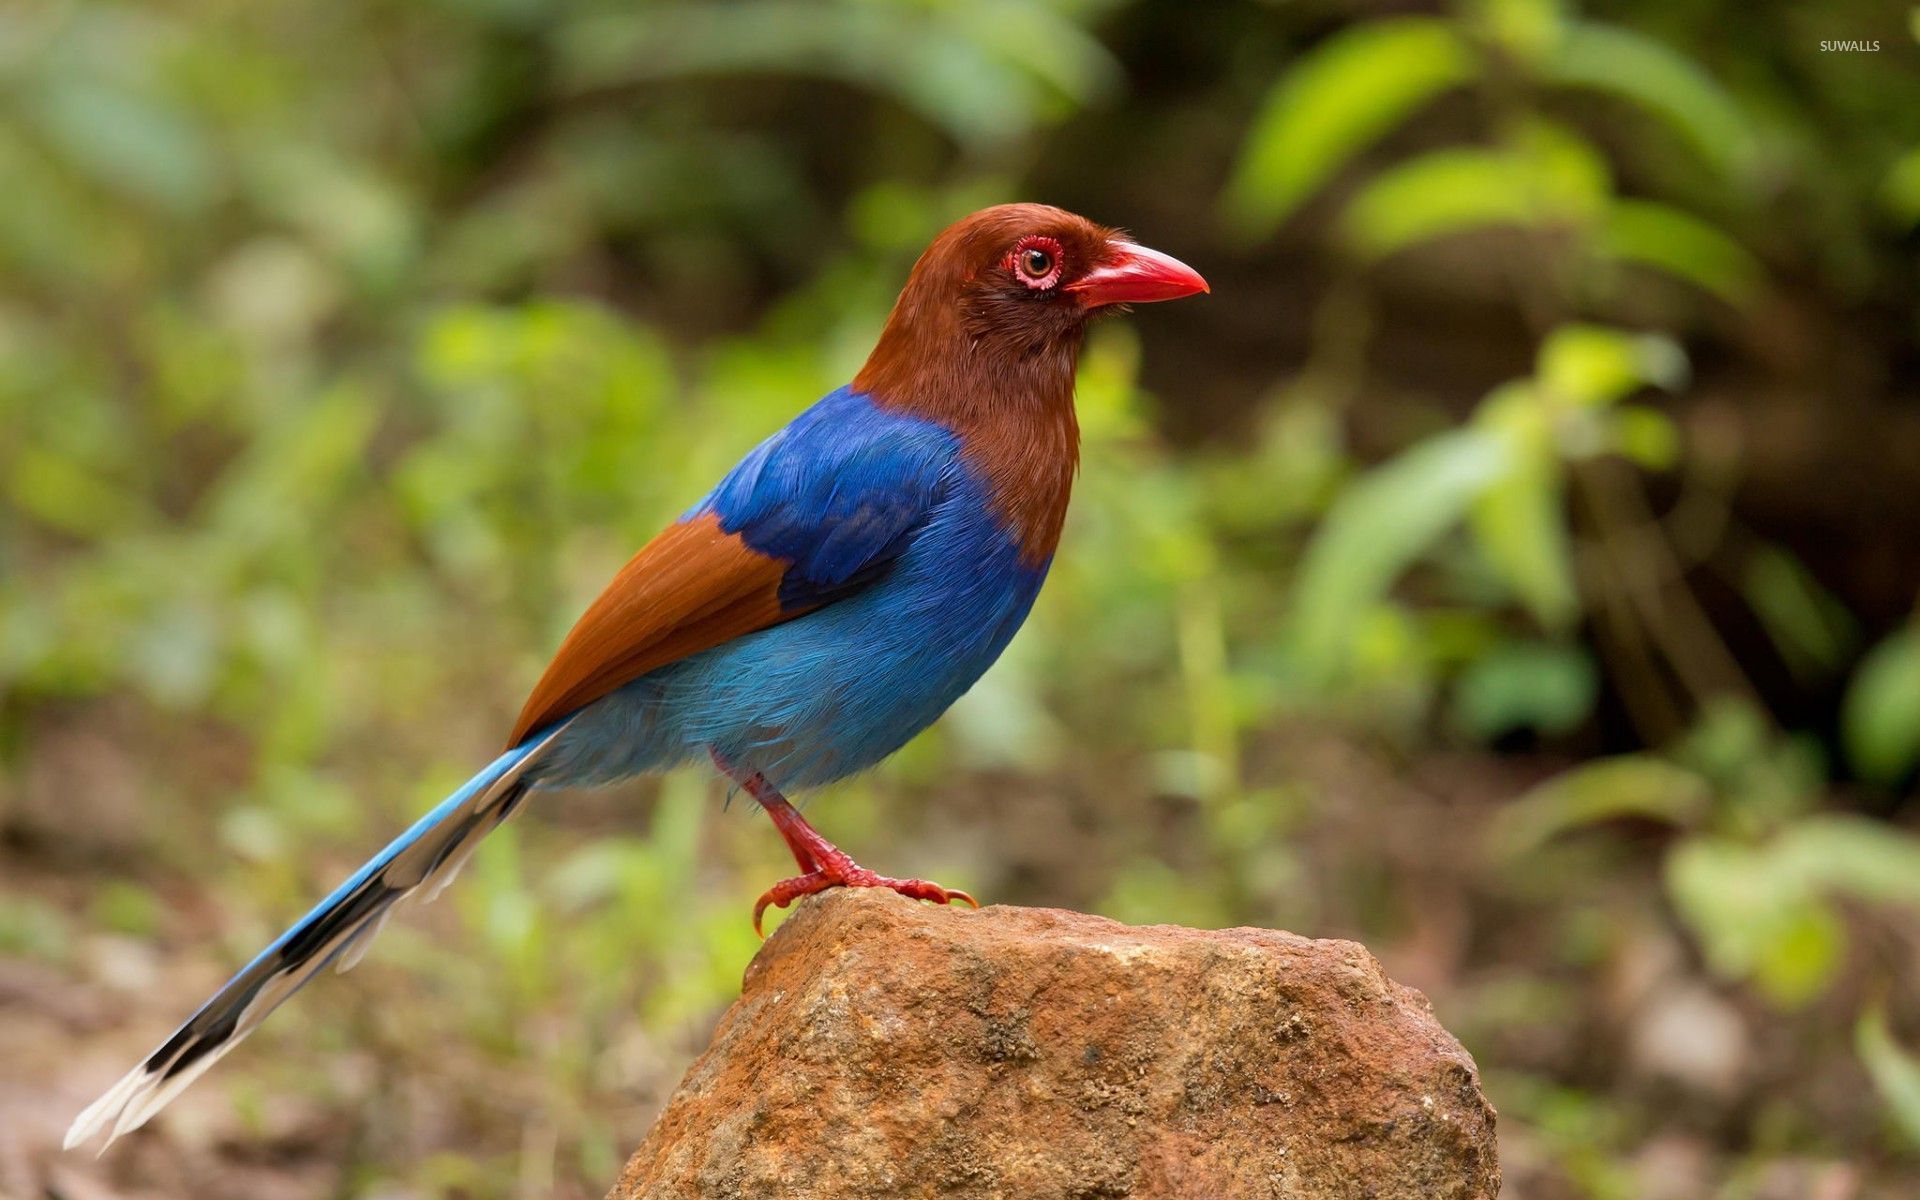 Sri Lanka blue magpie on a rock .suwalls.com